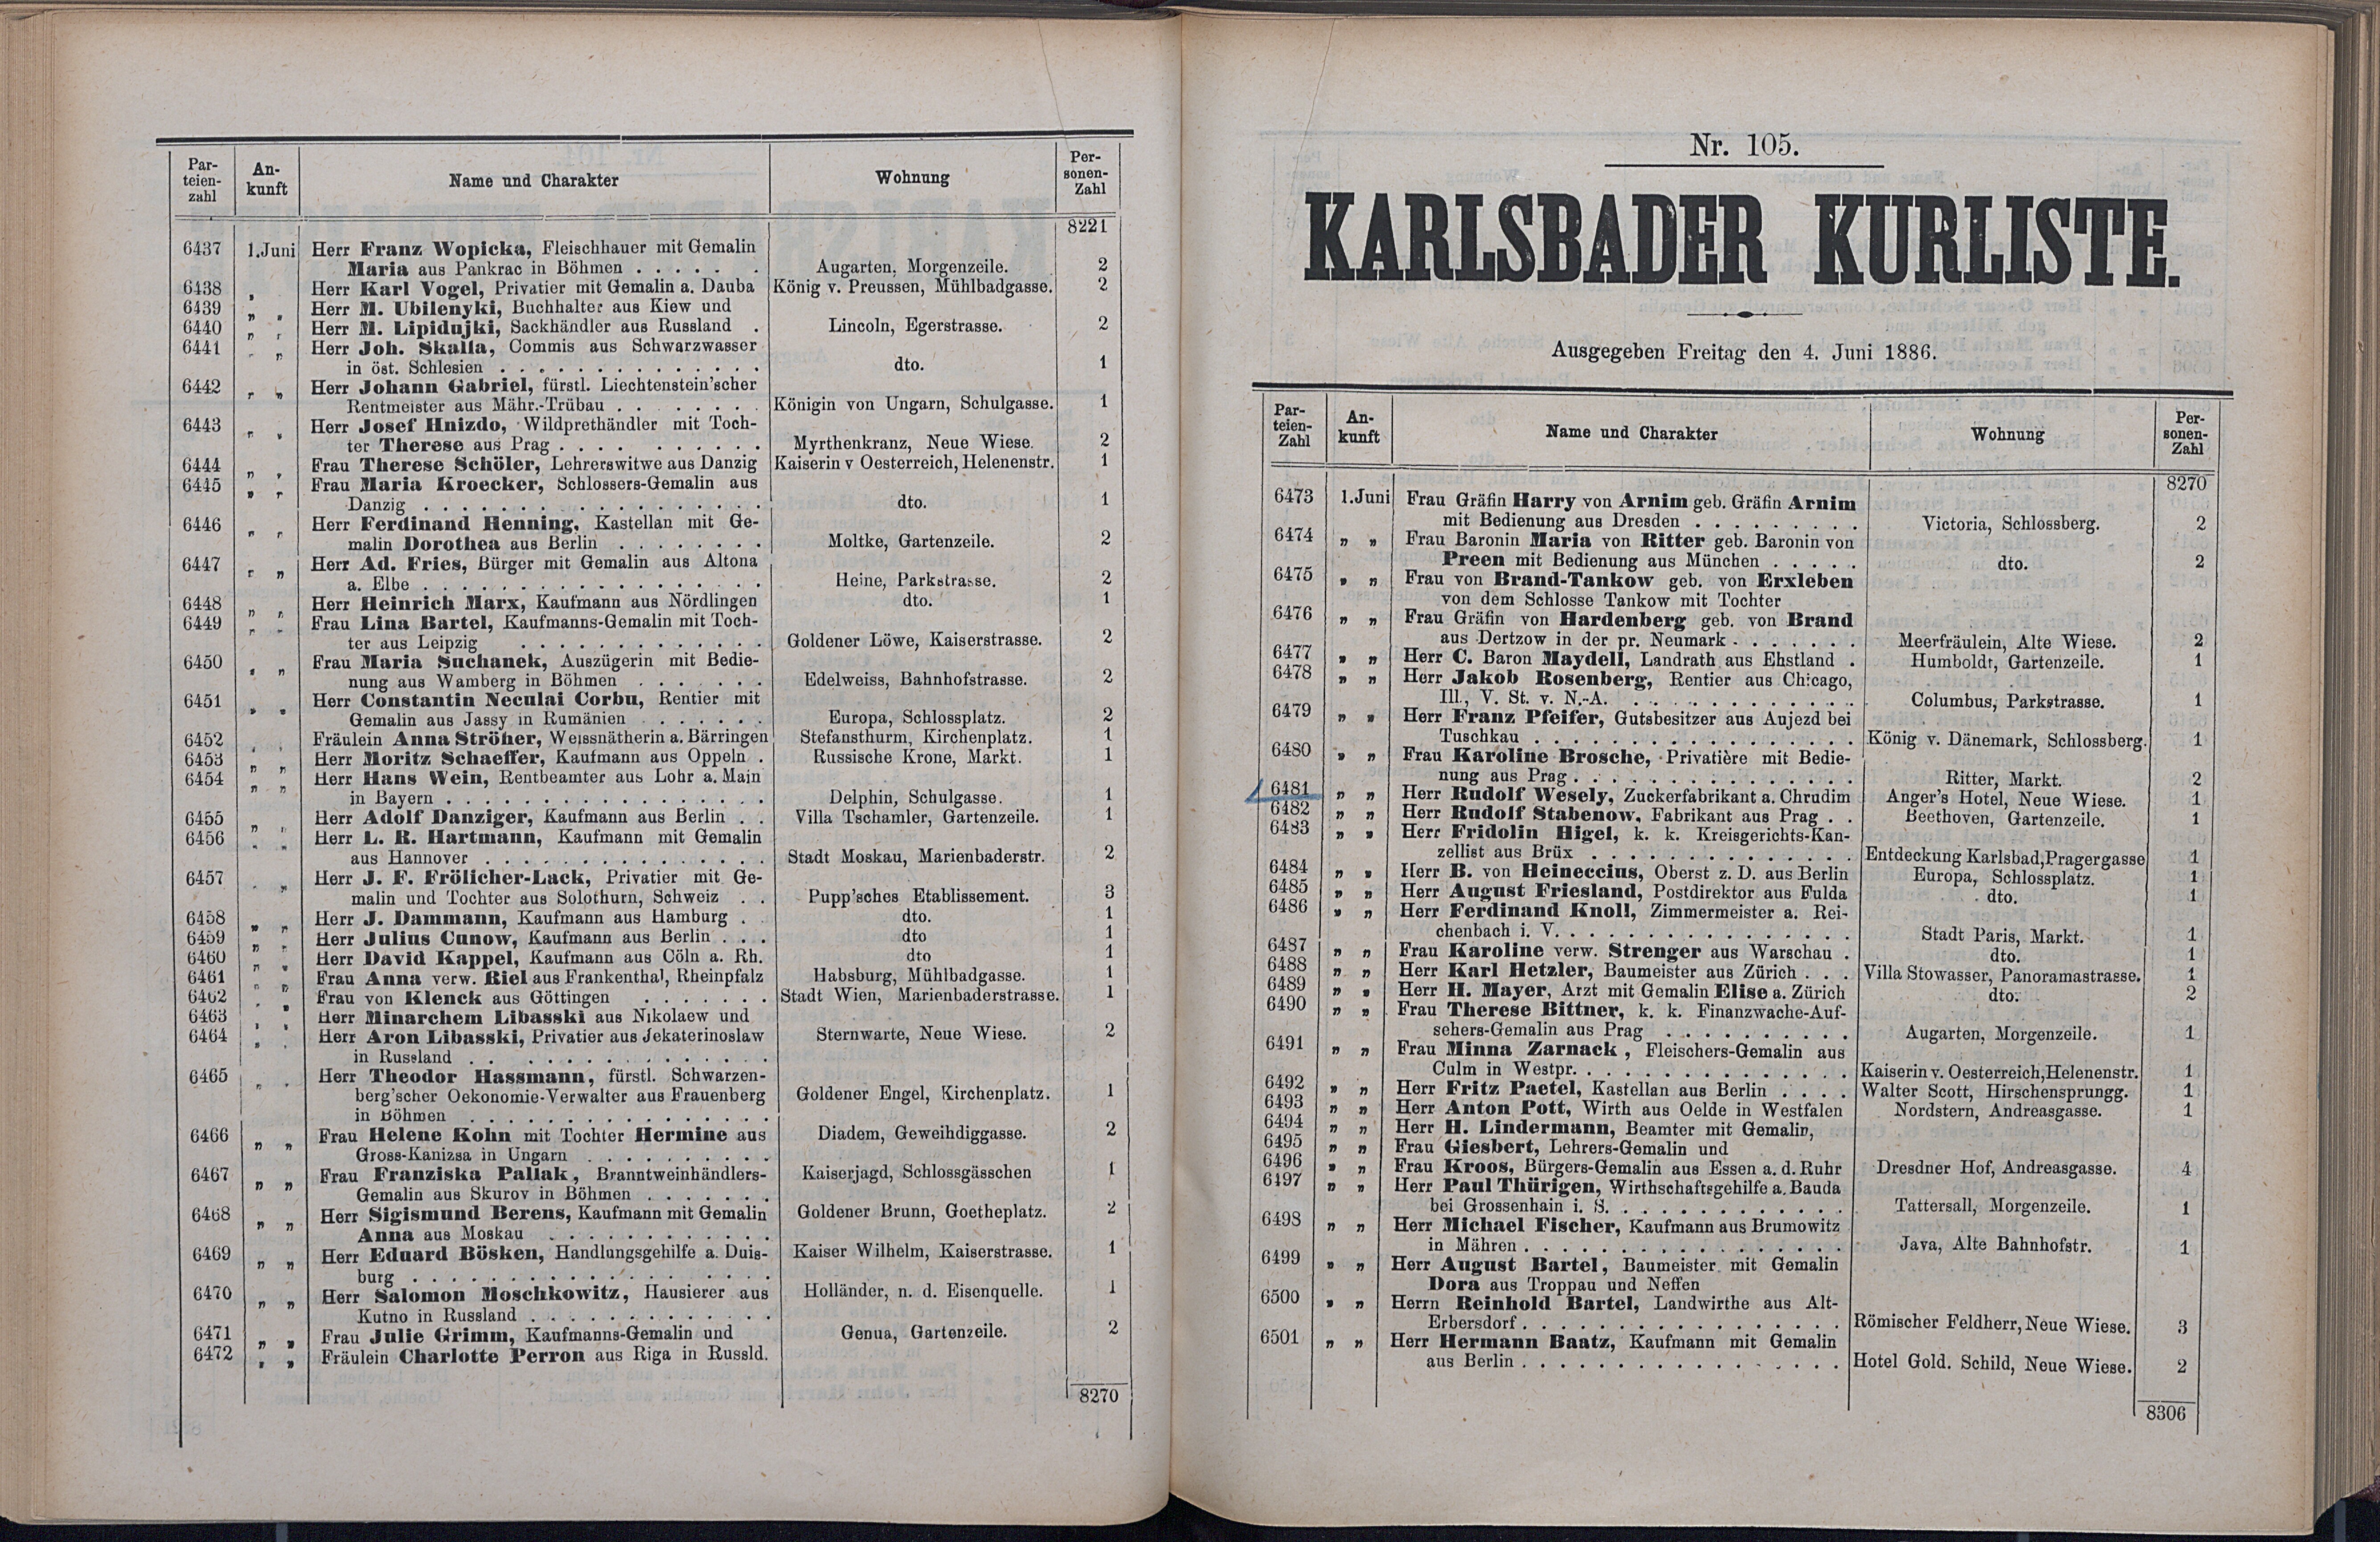 159. soap-kv_knihovna_karlsbader-kurliste-1886_1600